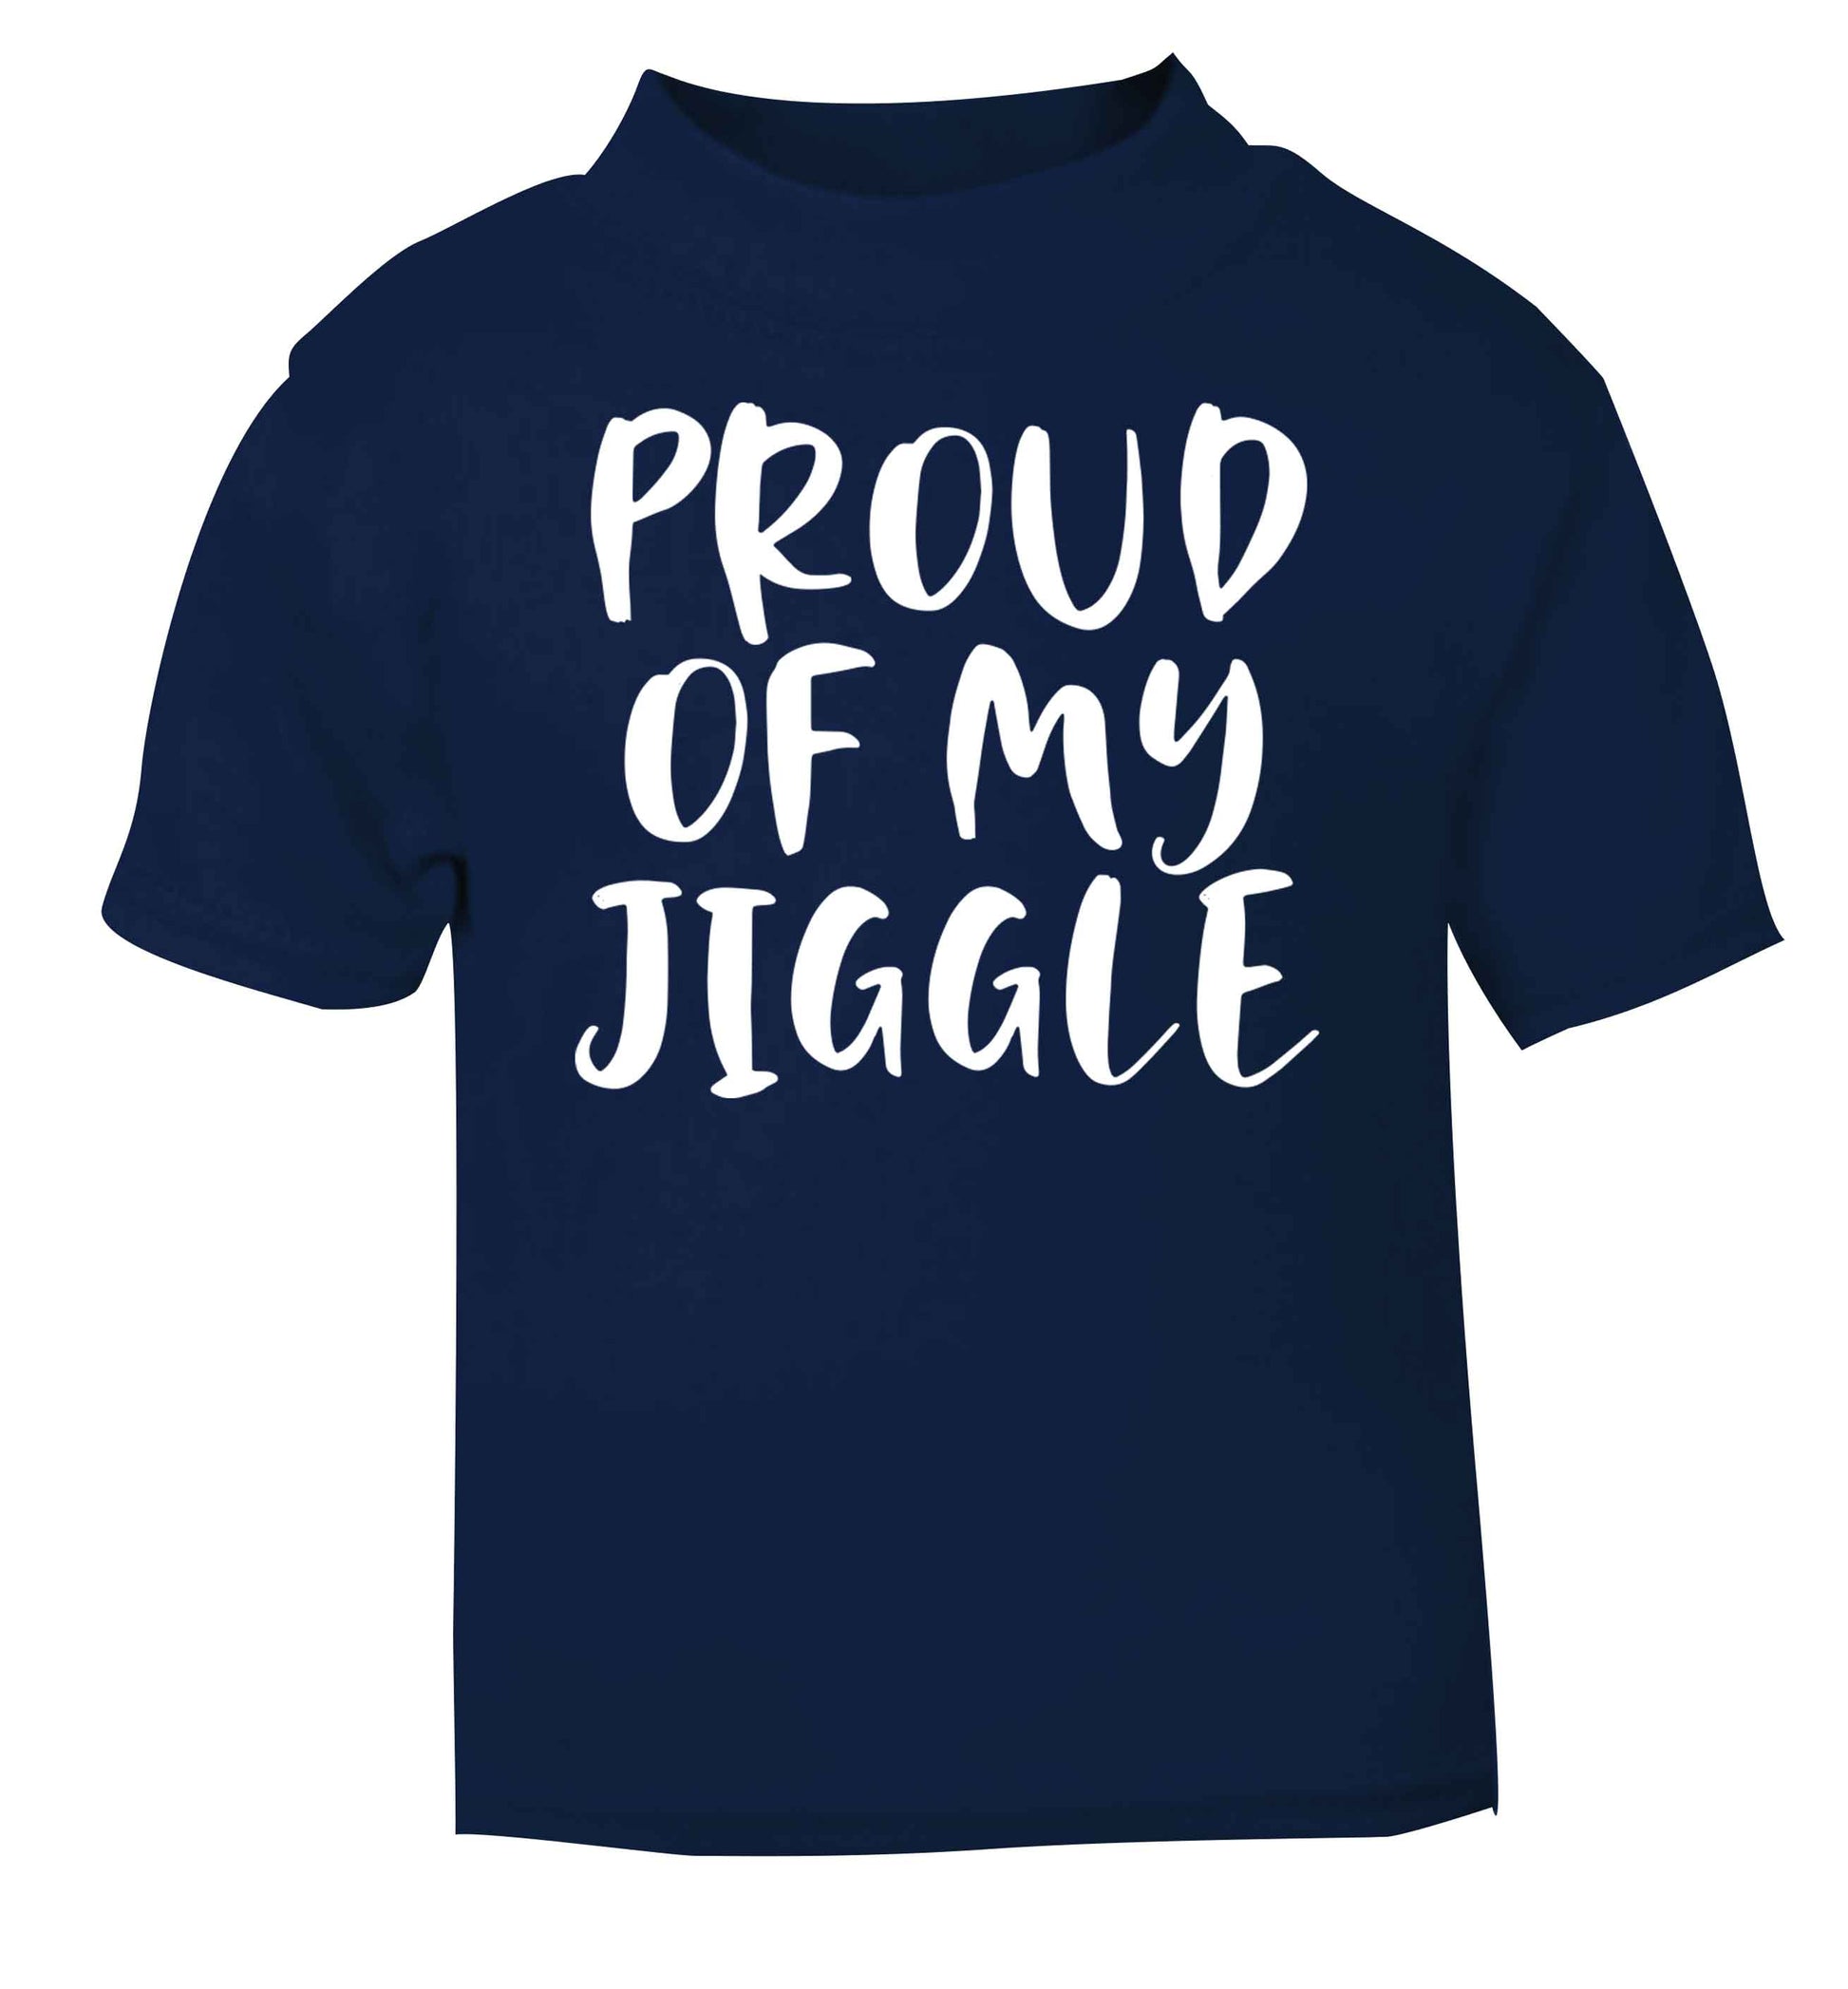 Proud of my jiggle navy baby toddler Tshirt 2 Years